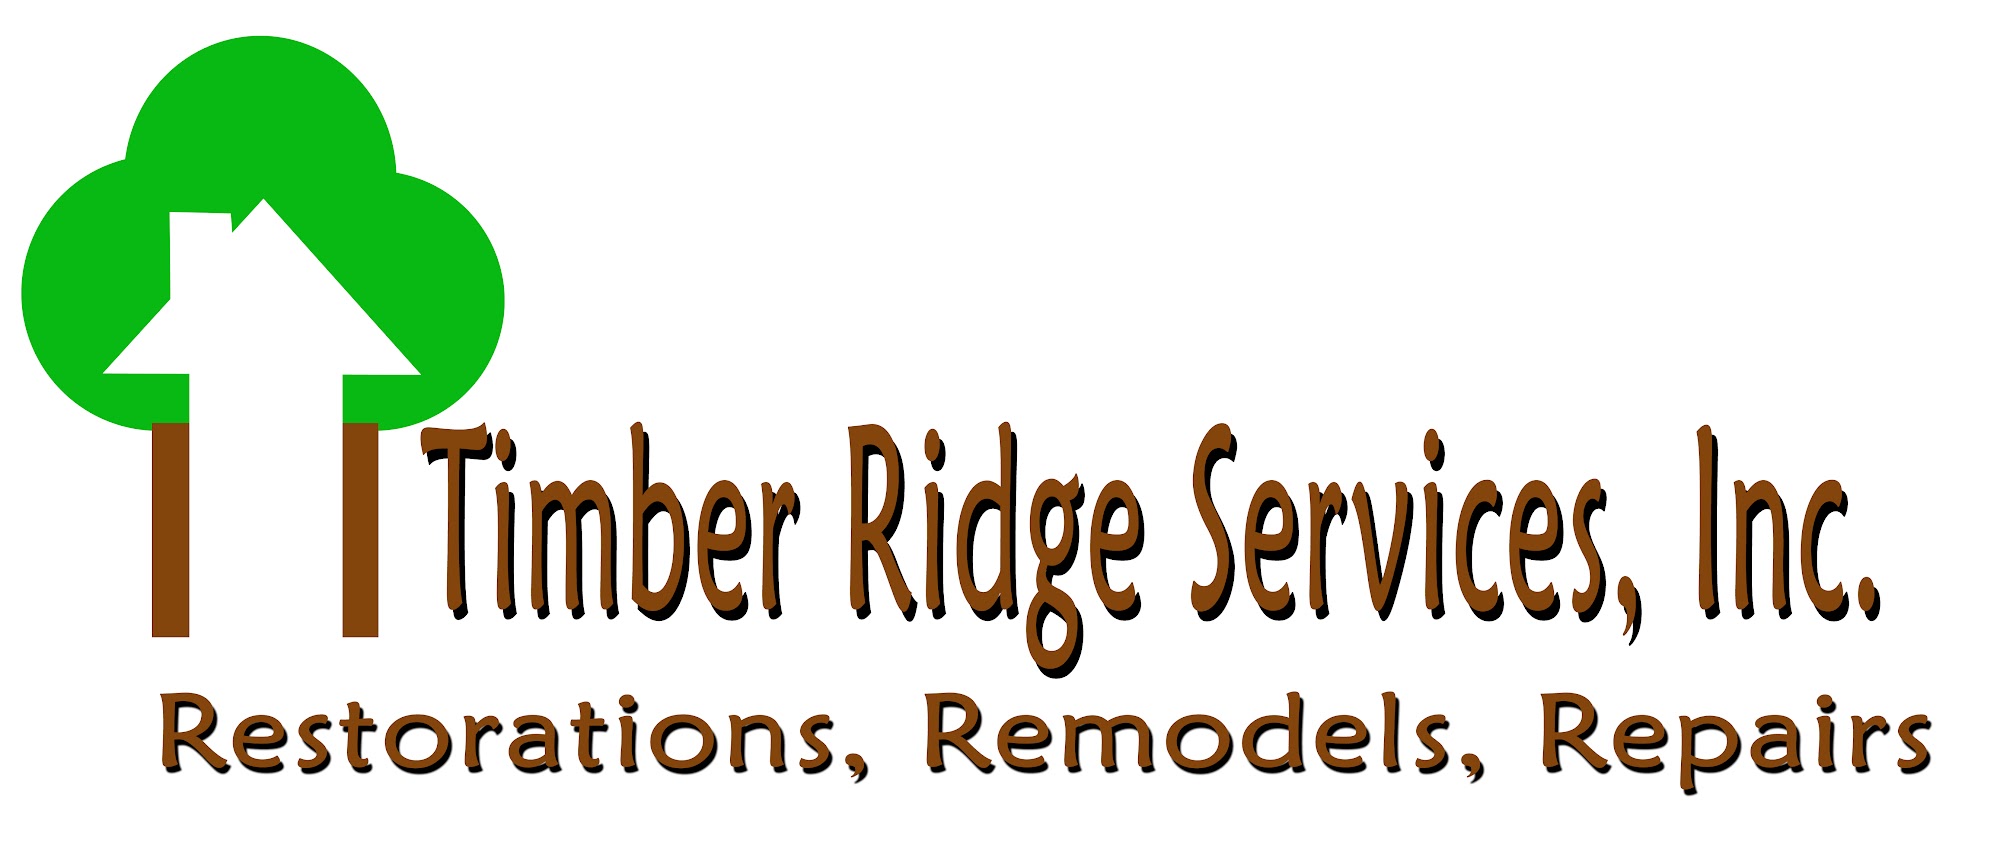 Timber Ridge Services, Inc.